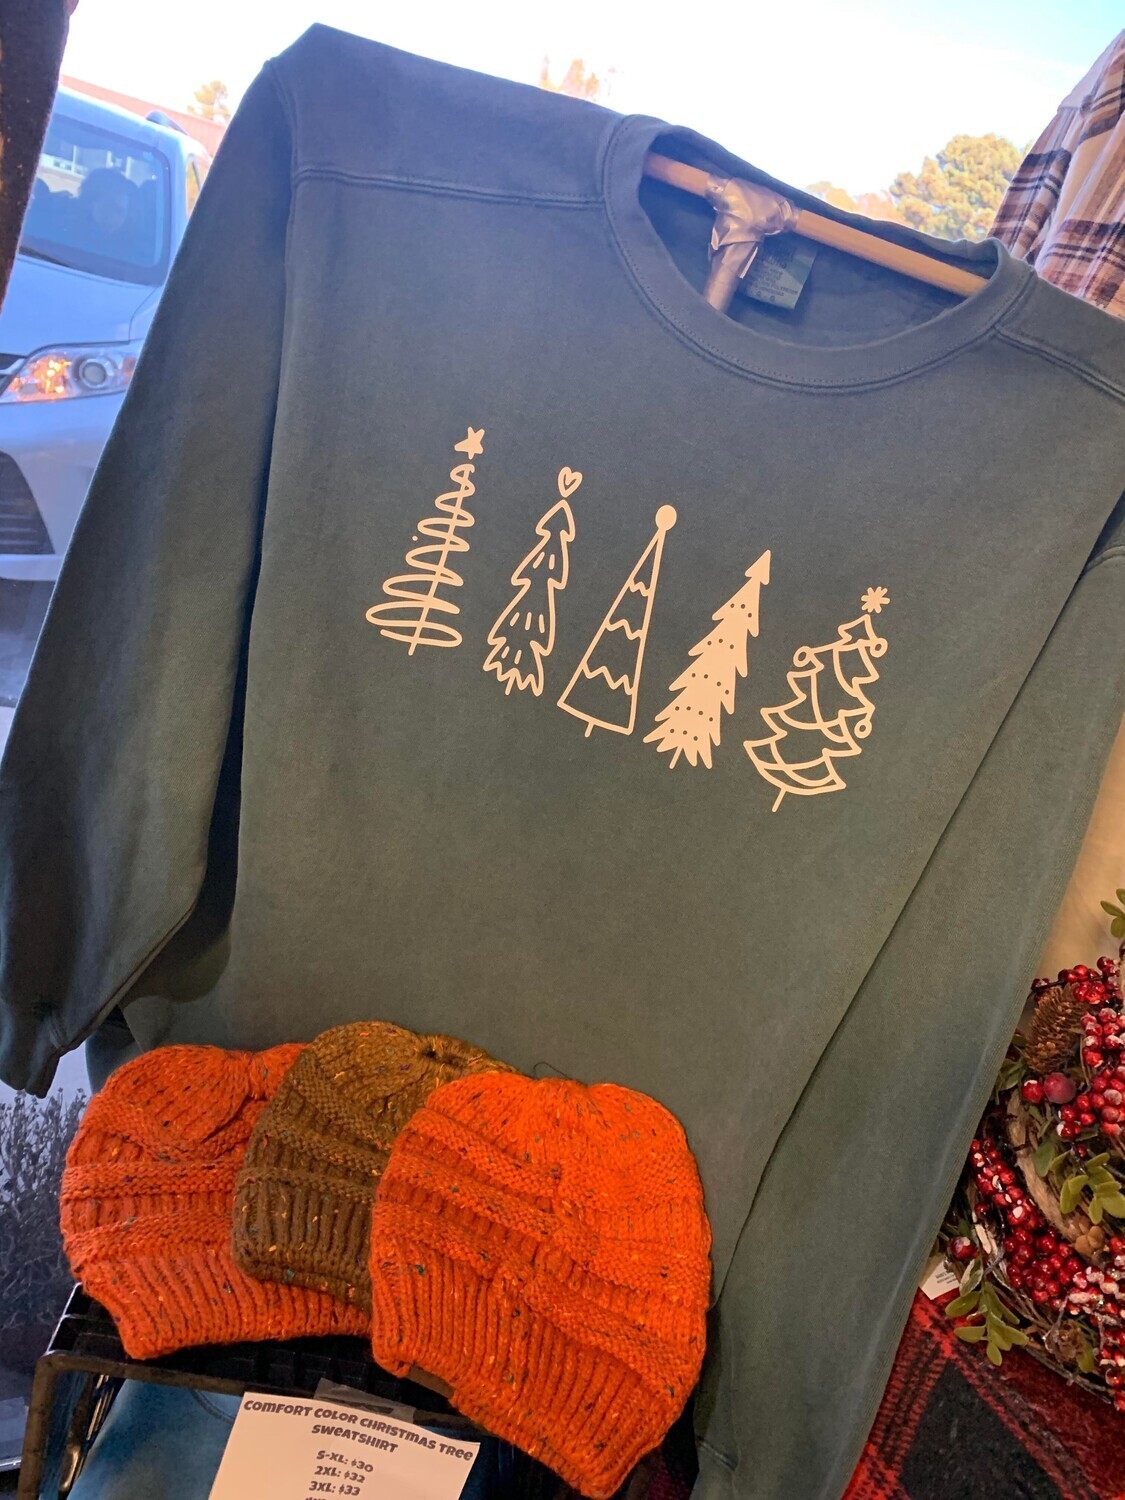 Christmas Trees Sweatshirt